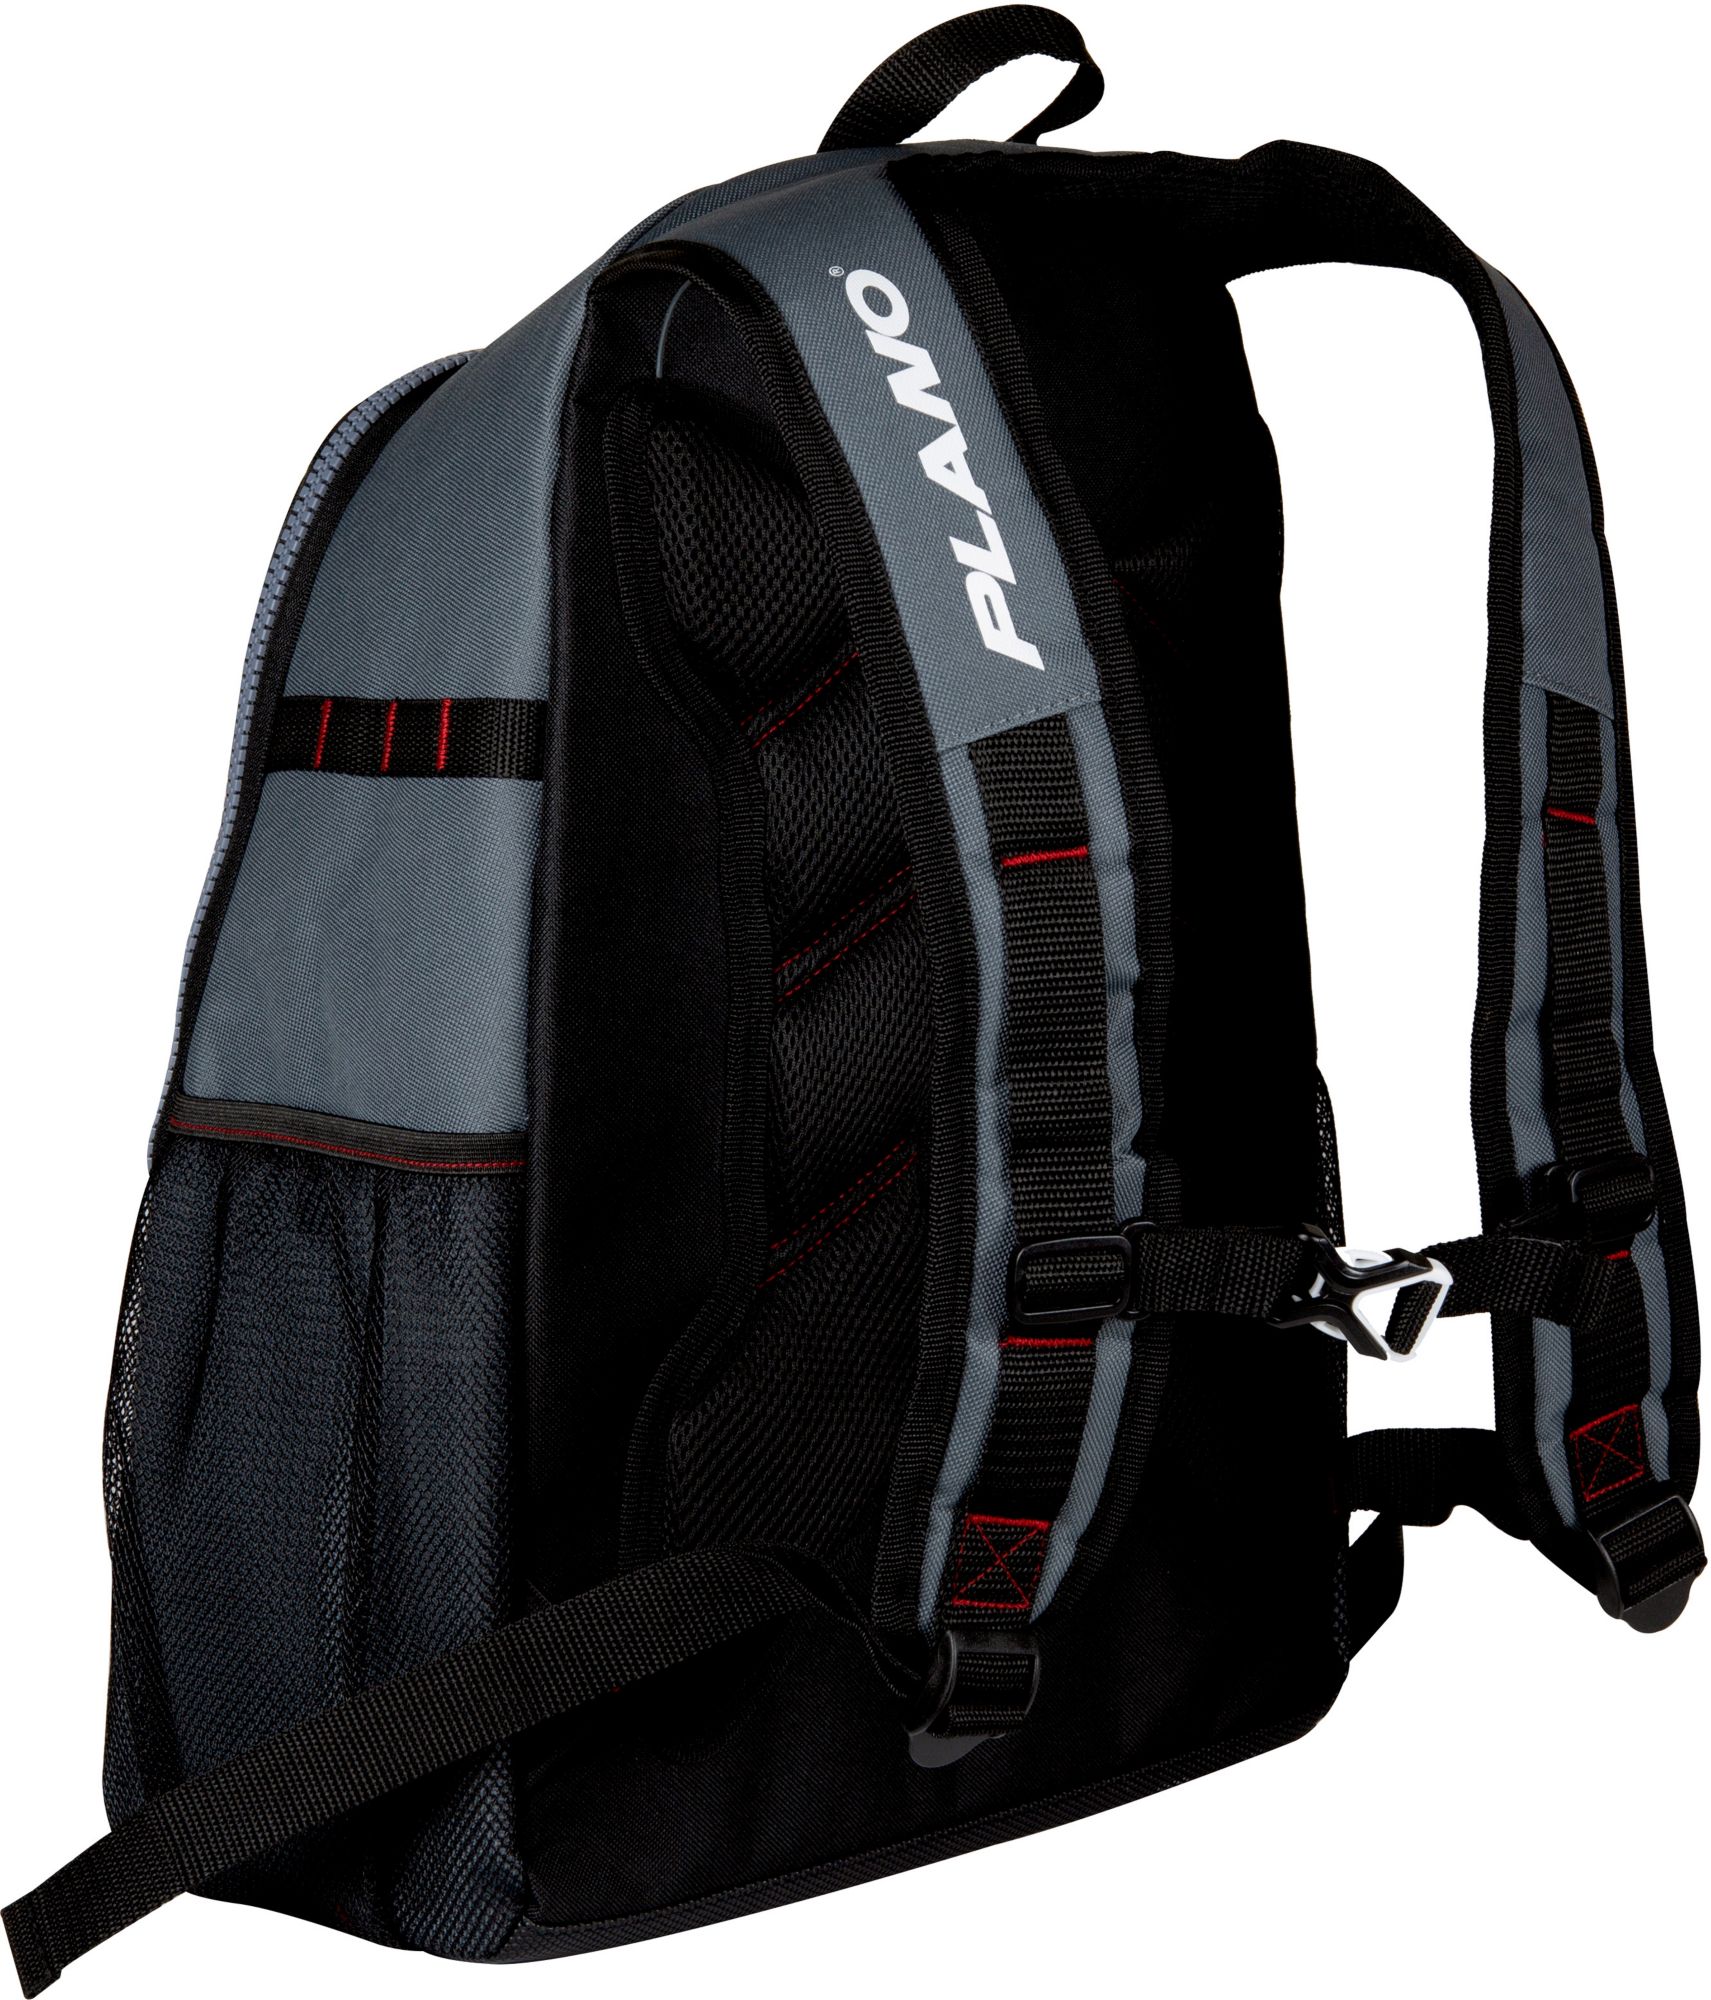 Plano Pro Series 3700 Bag